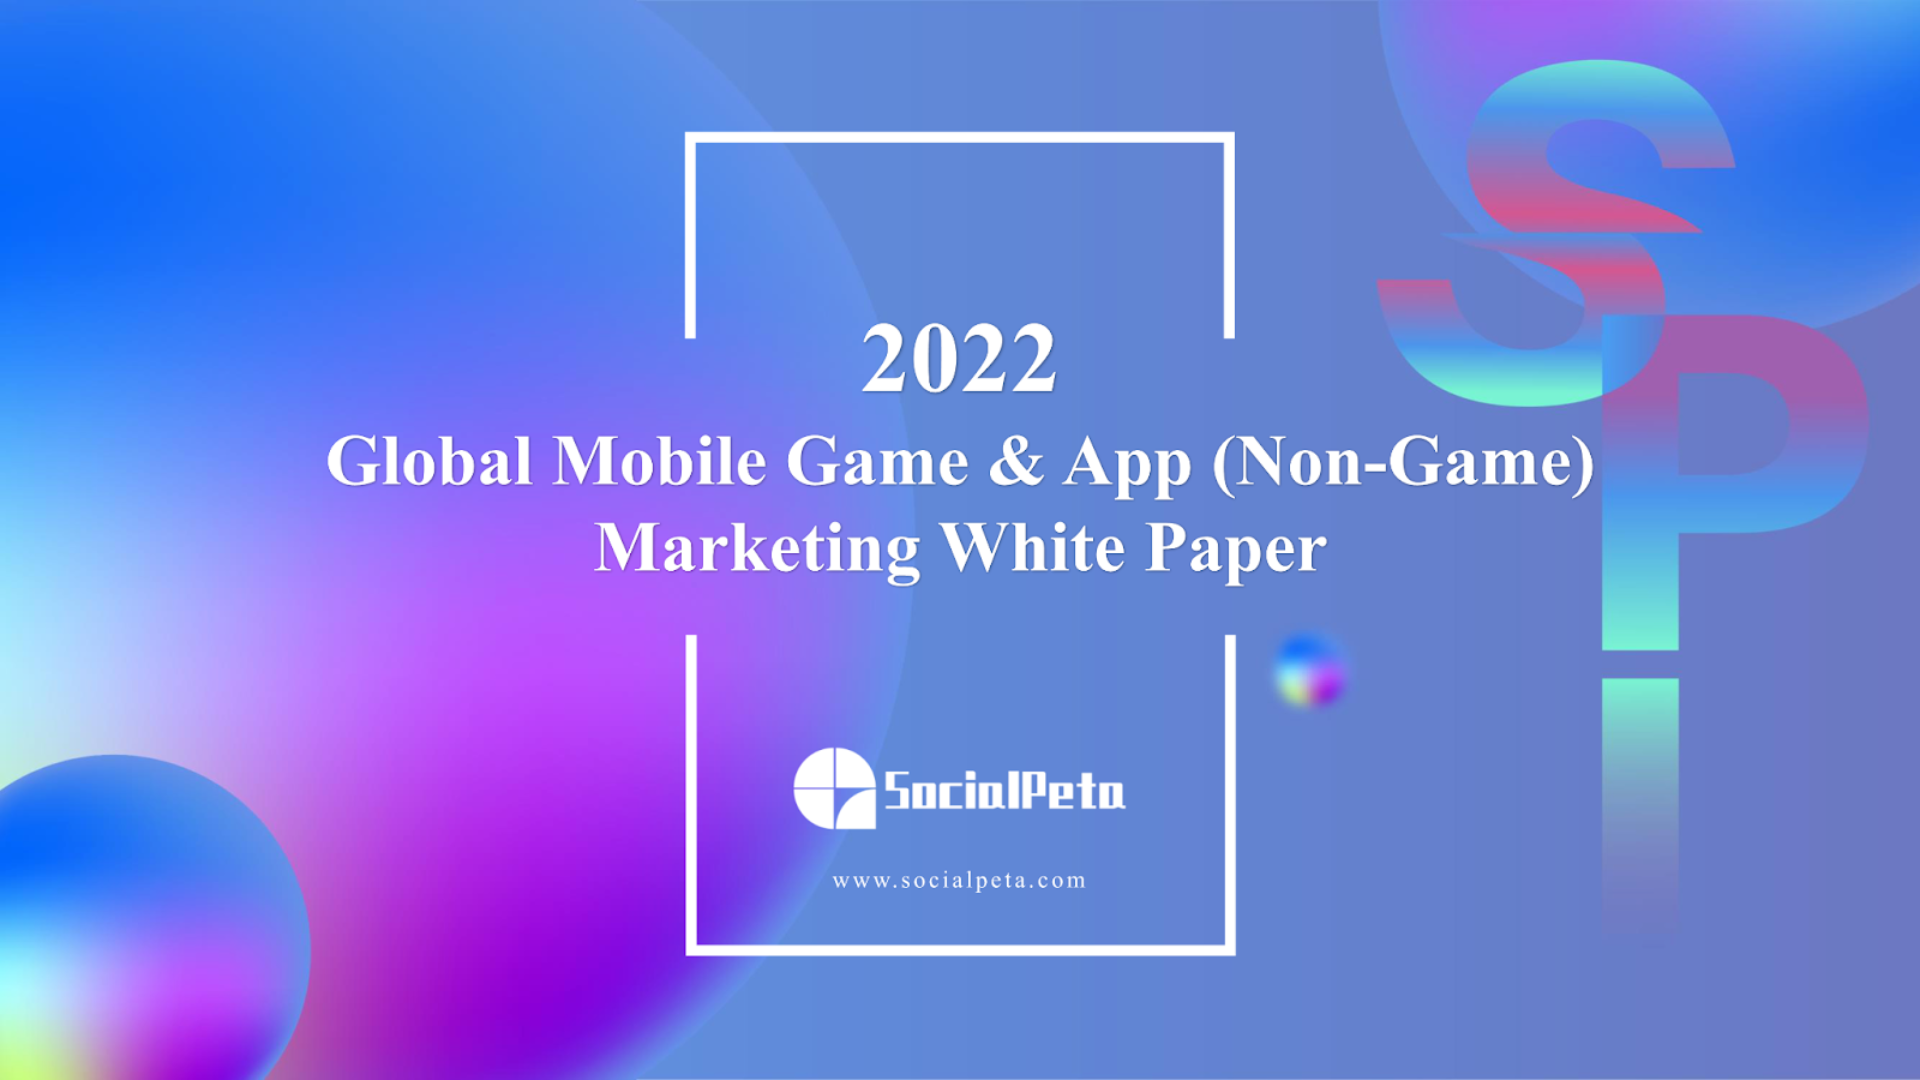 SocialPeta releases global analysis report on mobile game marketing in 2022